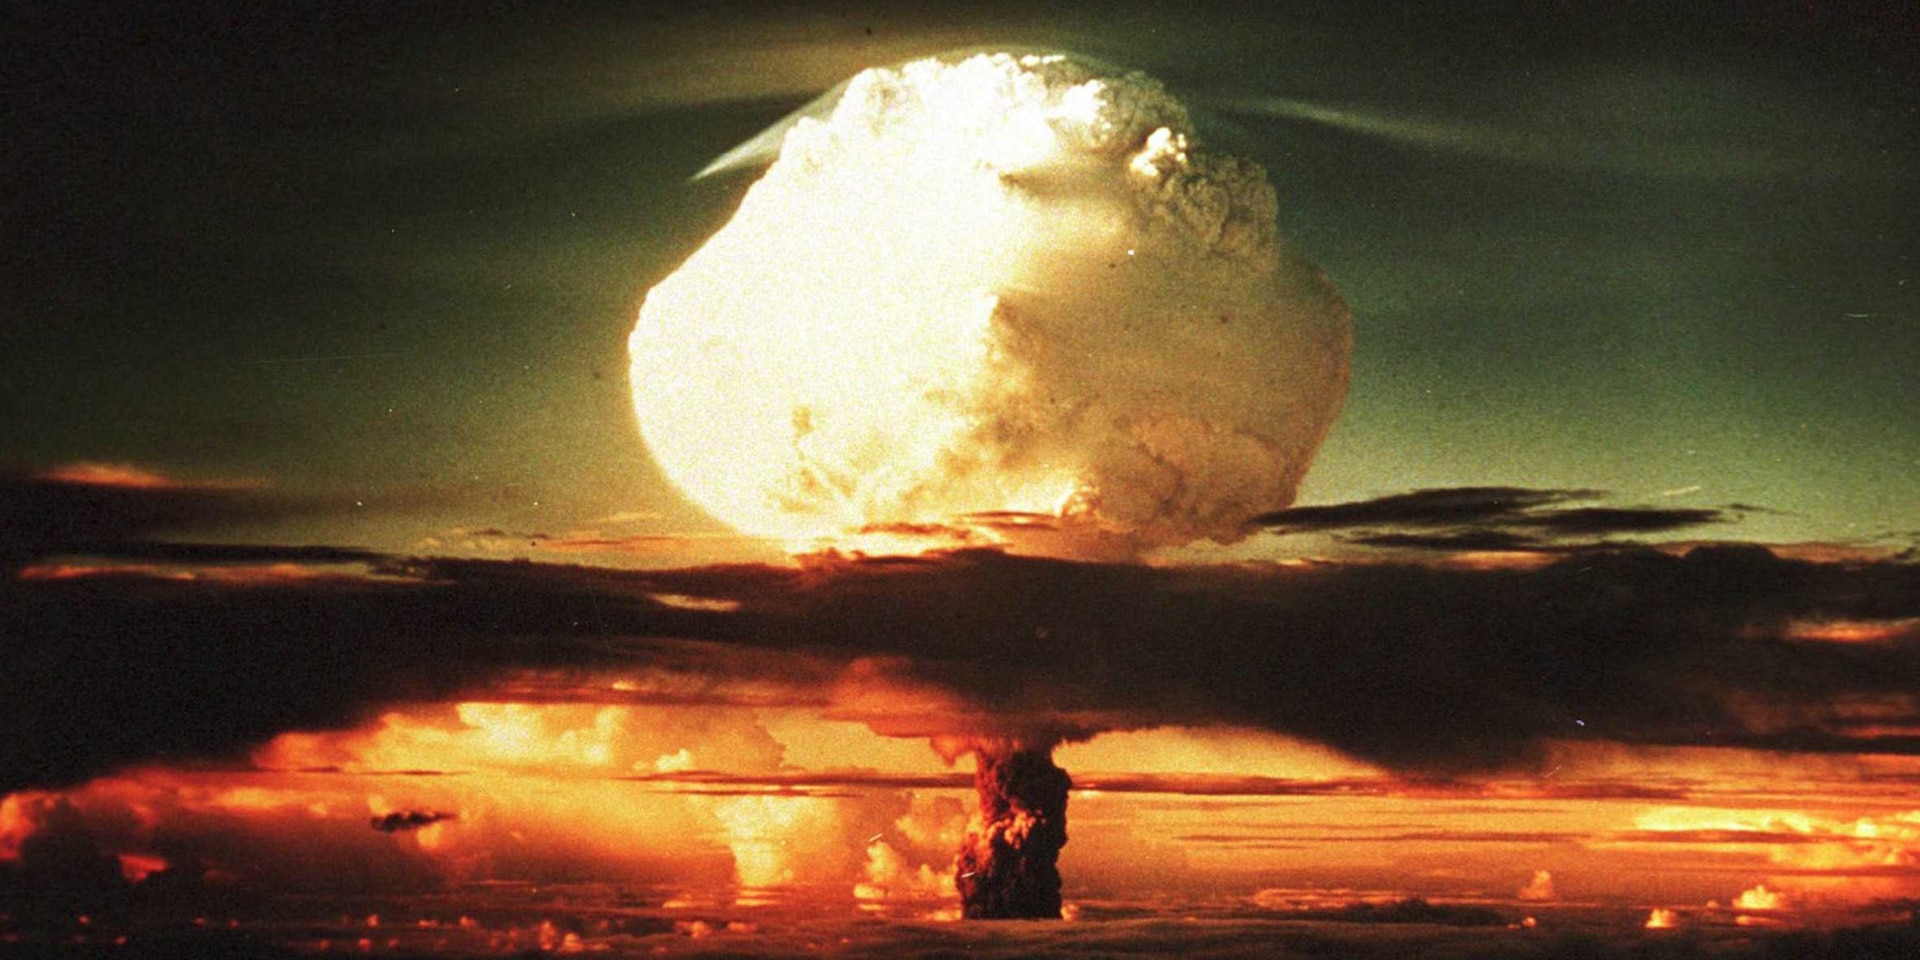 Der Pilz einer Atombombendetonation steigt in den Himmel.